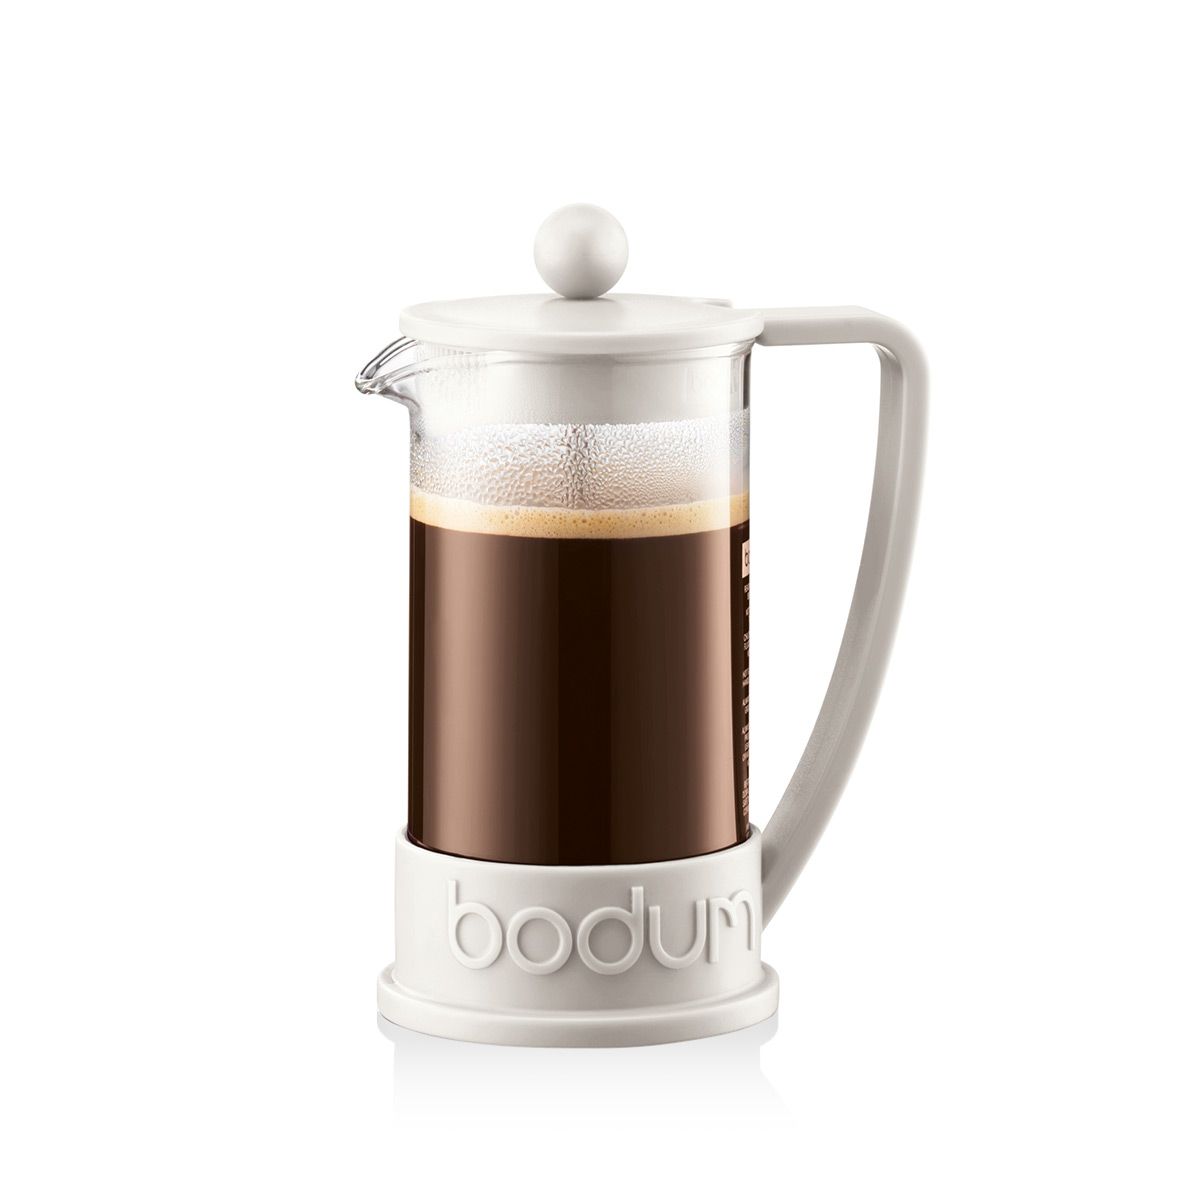 BODUM BRAZILFRENCH PRESS COFFEE MAKER 3CUP/0.35 LITER OFF WHITE 